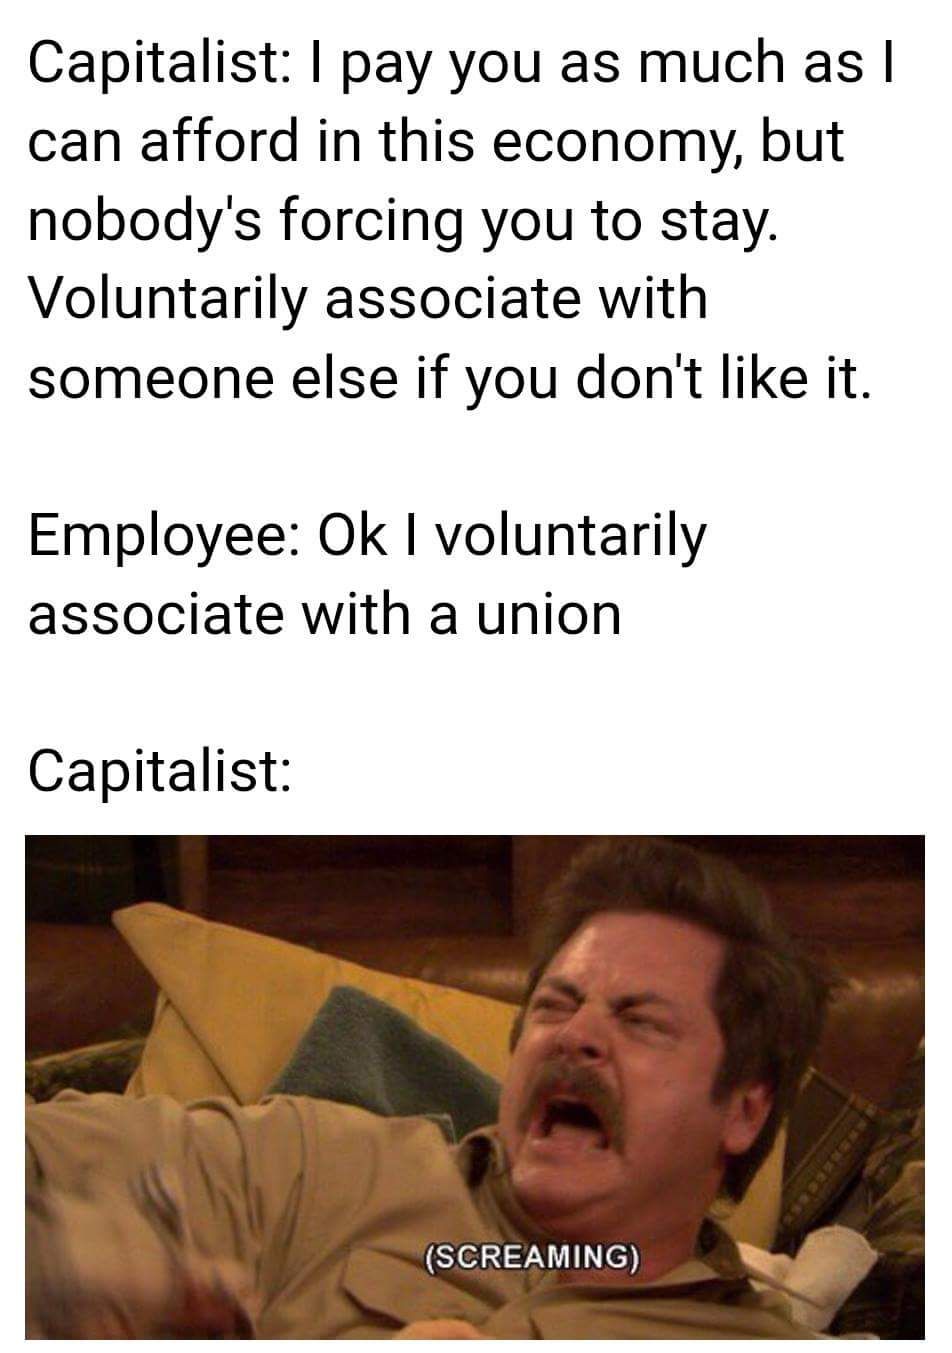 Union